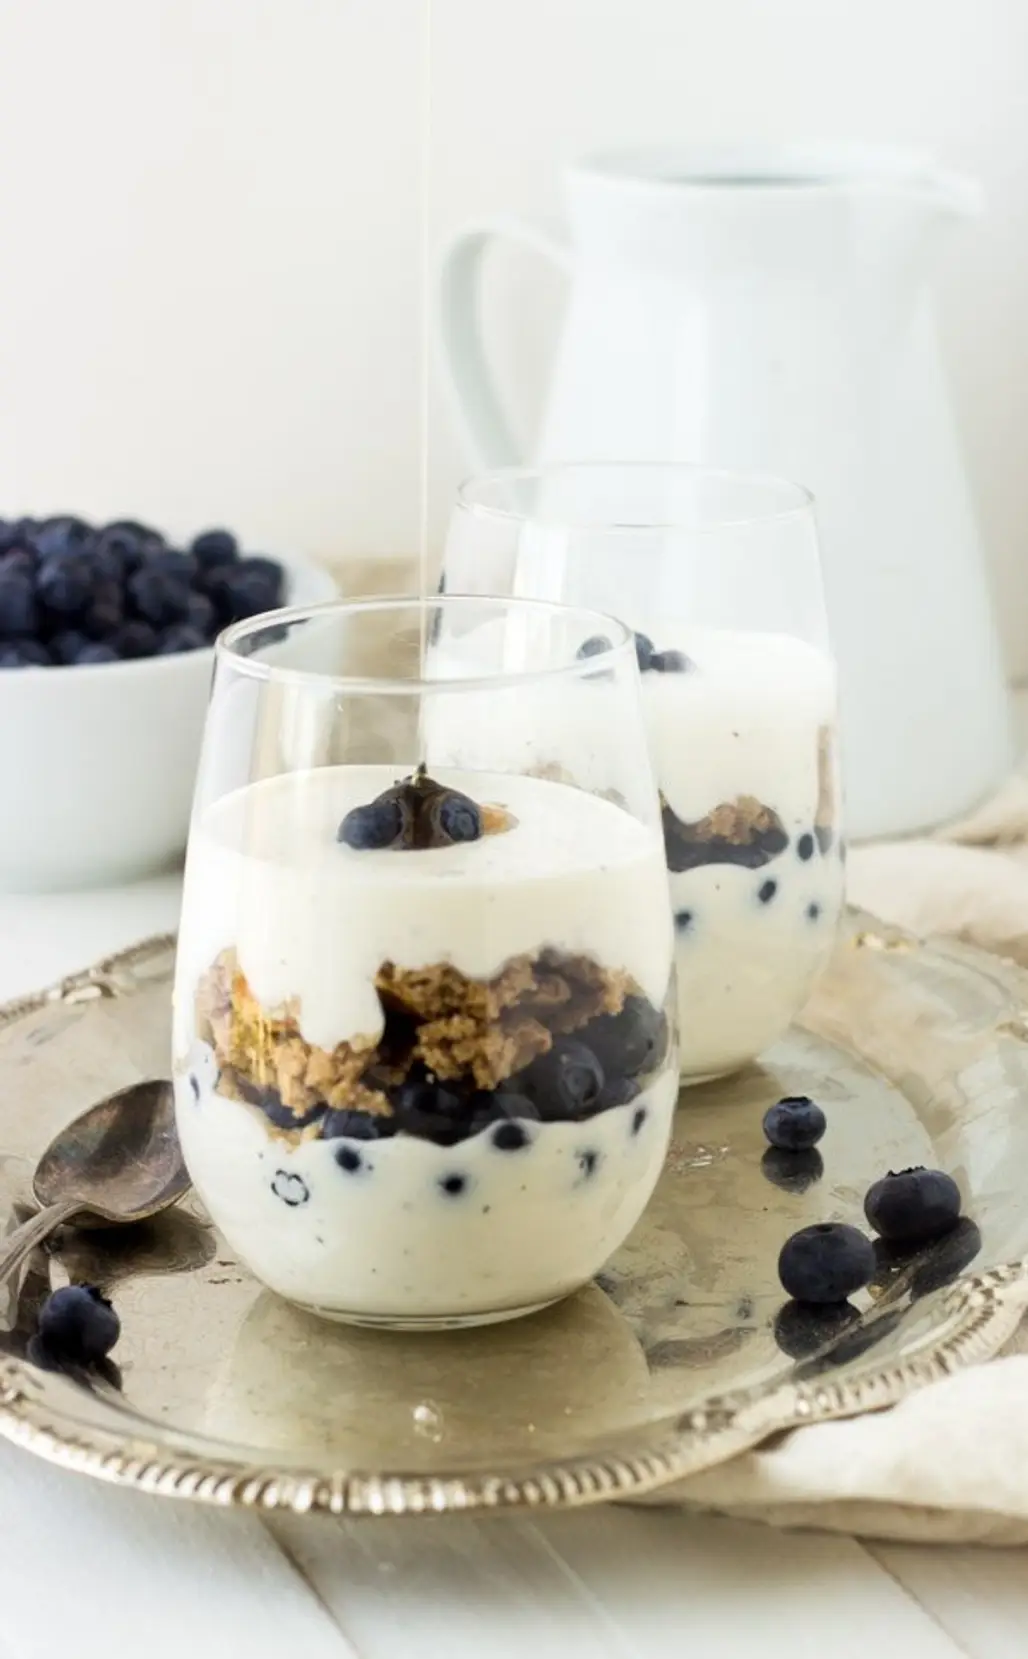 Greek Yogurt and Blueberries Make a Great Snack